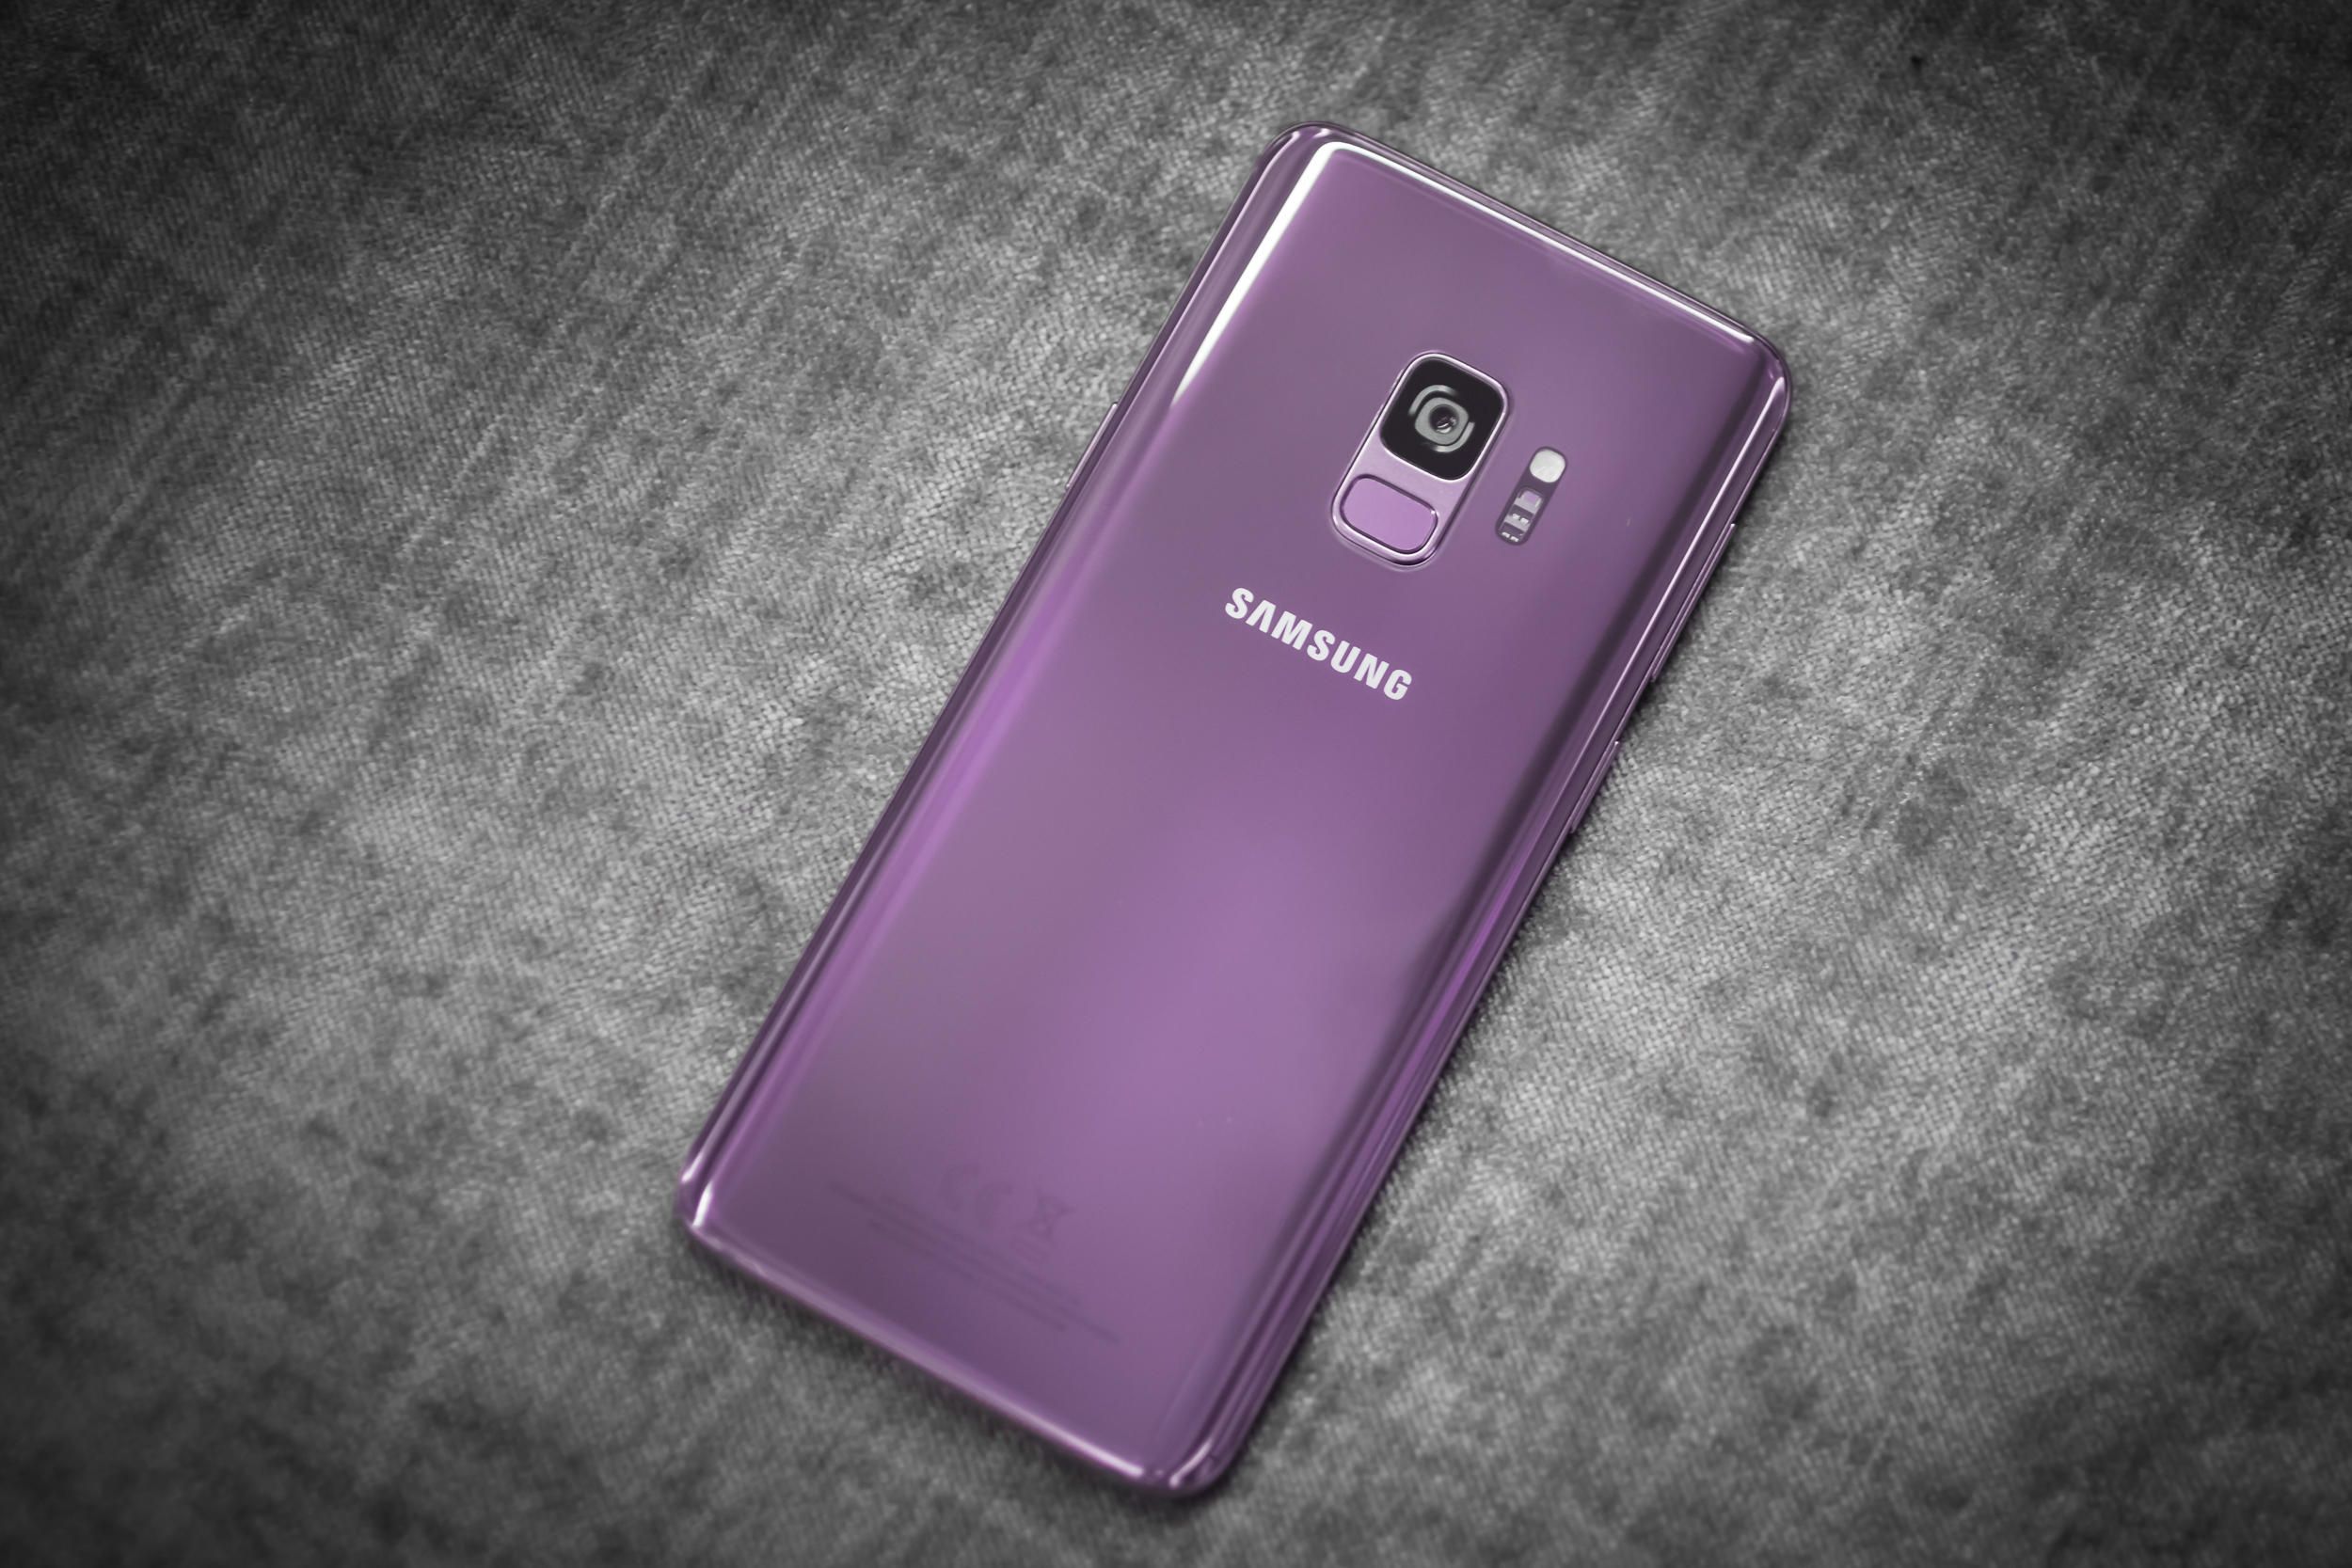 Смартфон SAMSUNG Galaxy S9 (SM-G960F) Purple - зображення 2